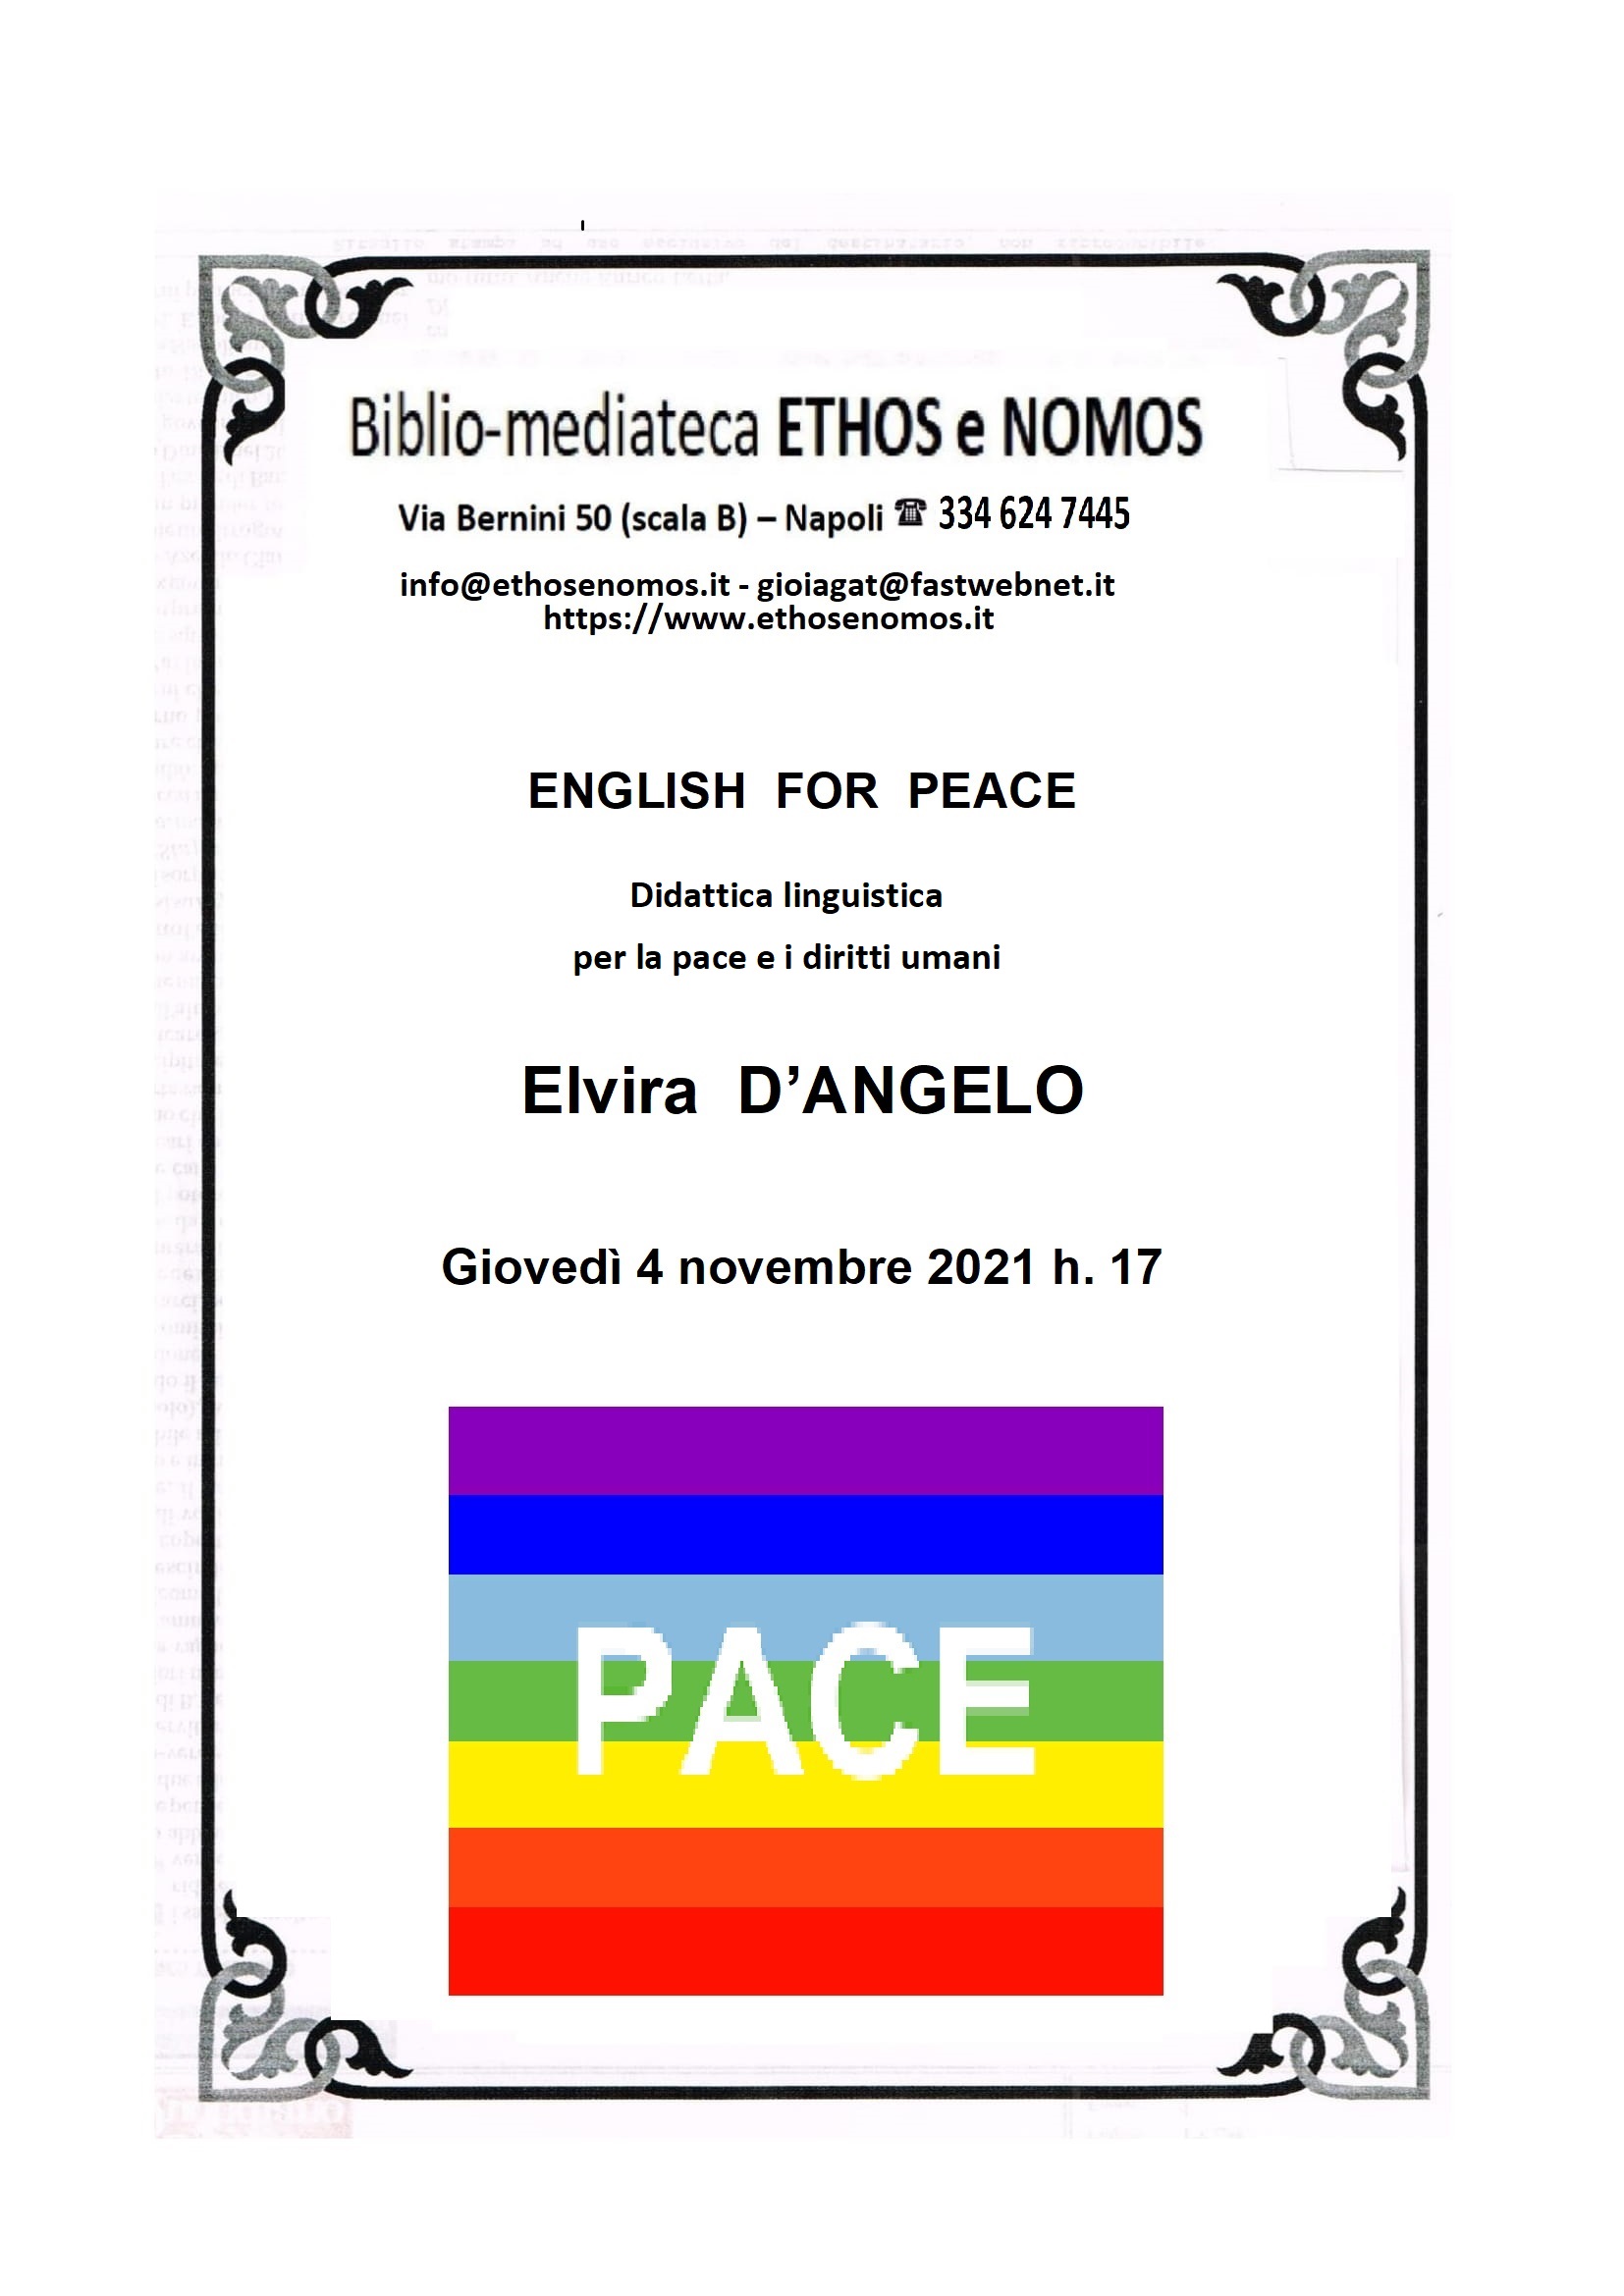 ELVIRA D'ANGELO - English for peace